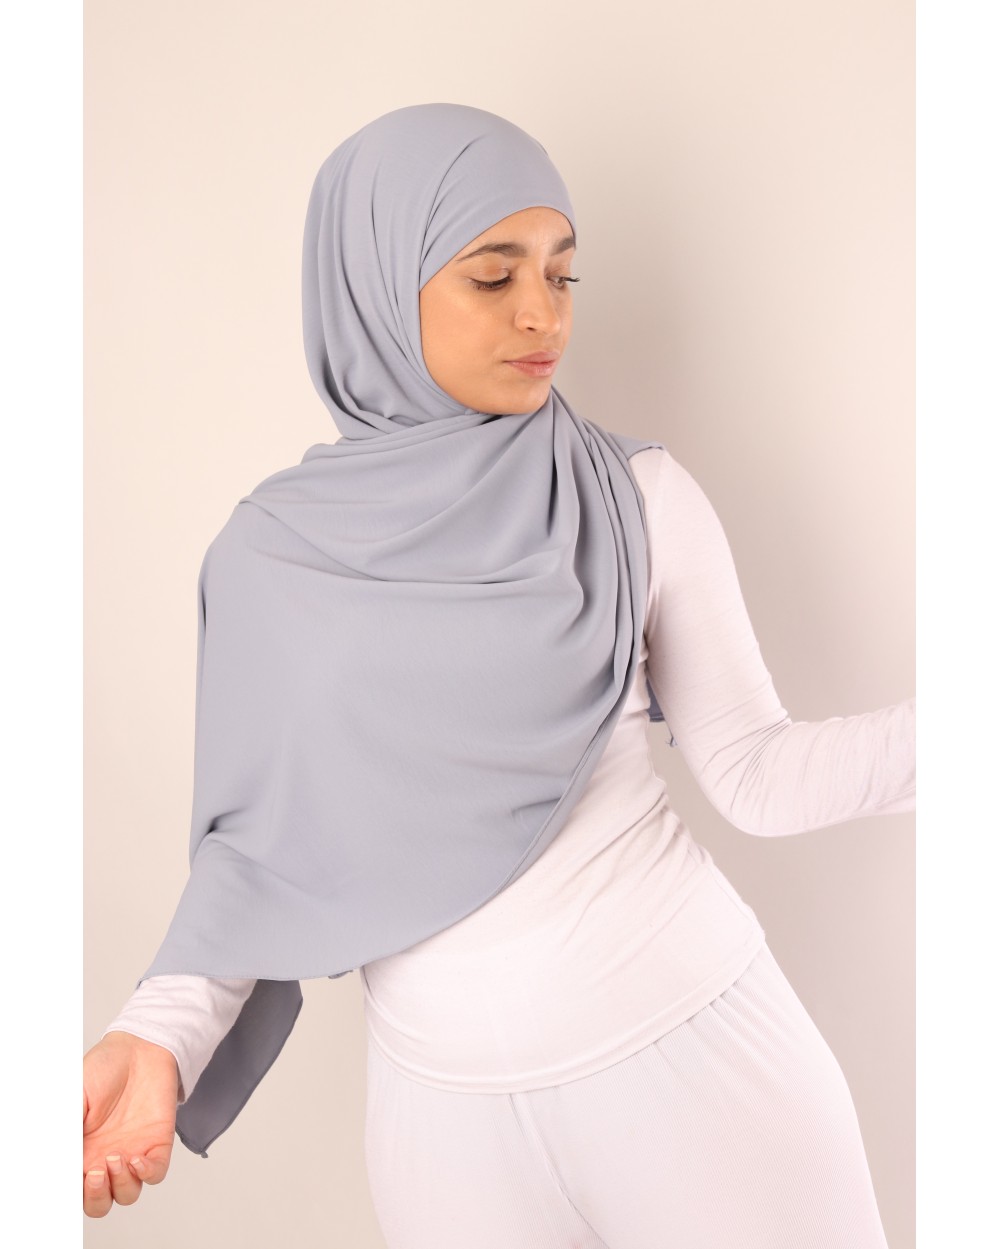 Hijab way silk of Medina bonnet ready to put on Muslim woman